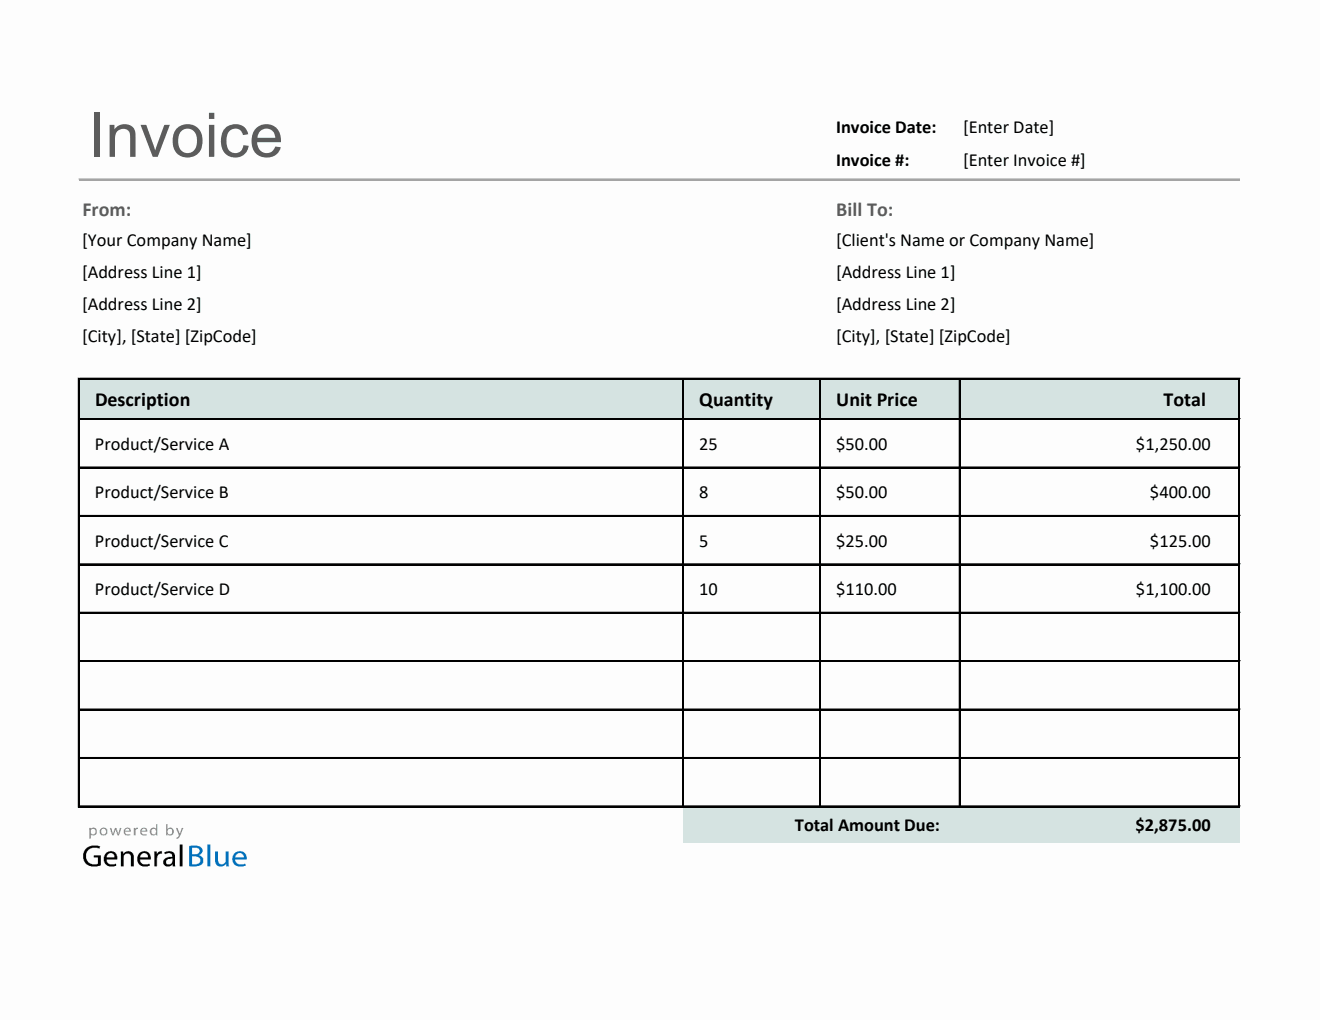 U.S. Invoice Template in Excel (Plain)